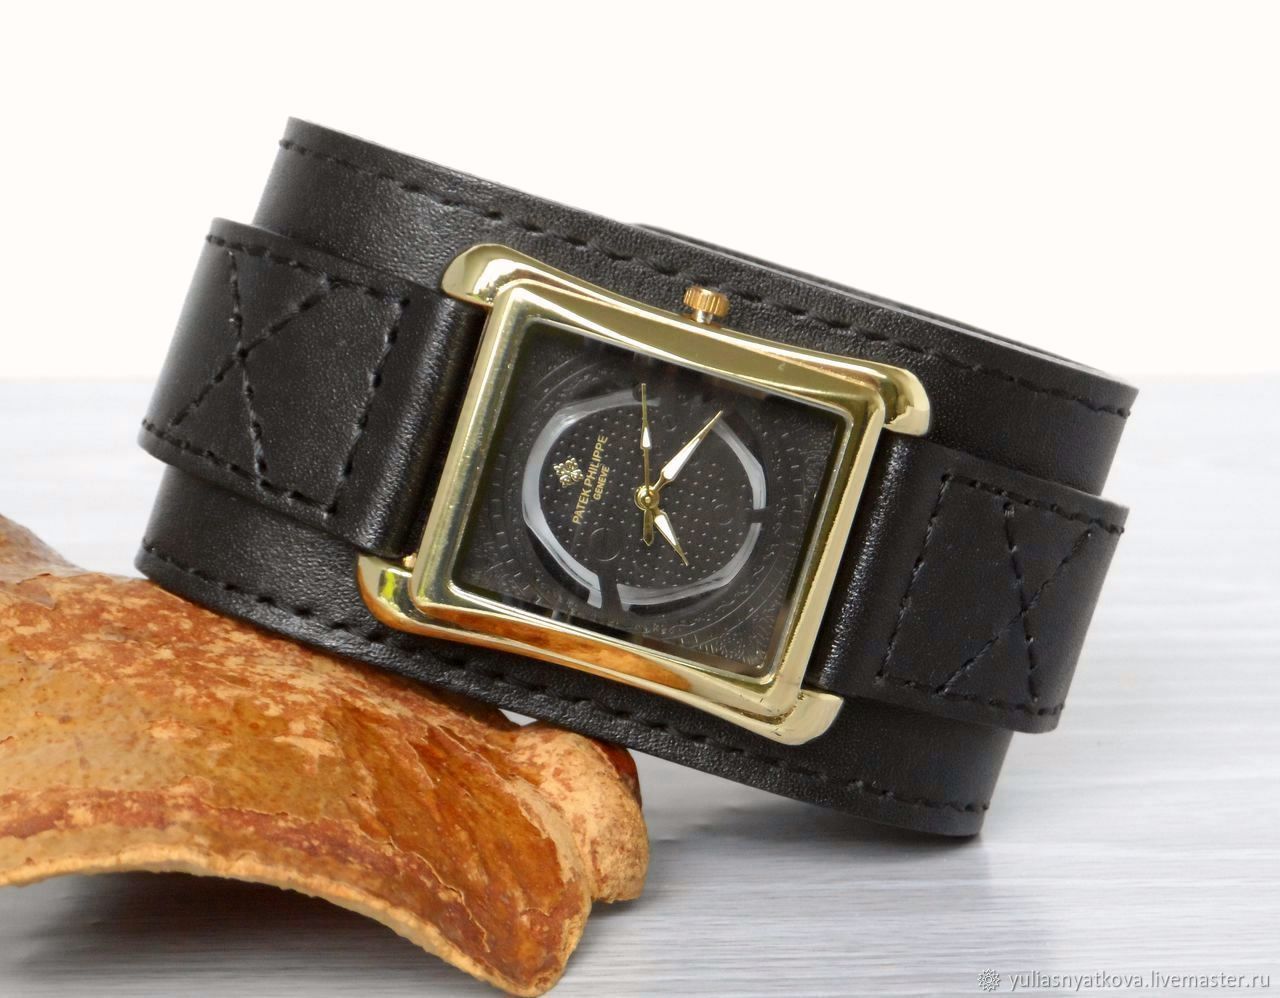 Wristwatch on genuine leather bracelet, Watches, St. Petersburg,  Фото №1